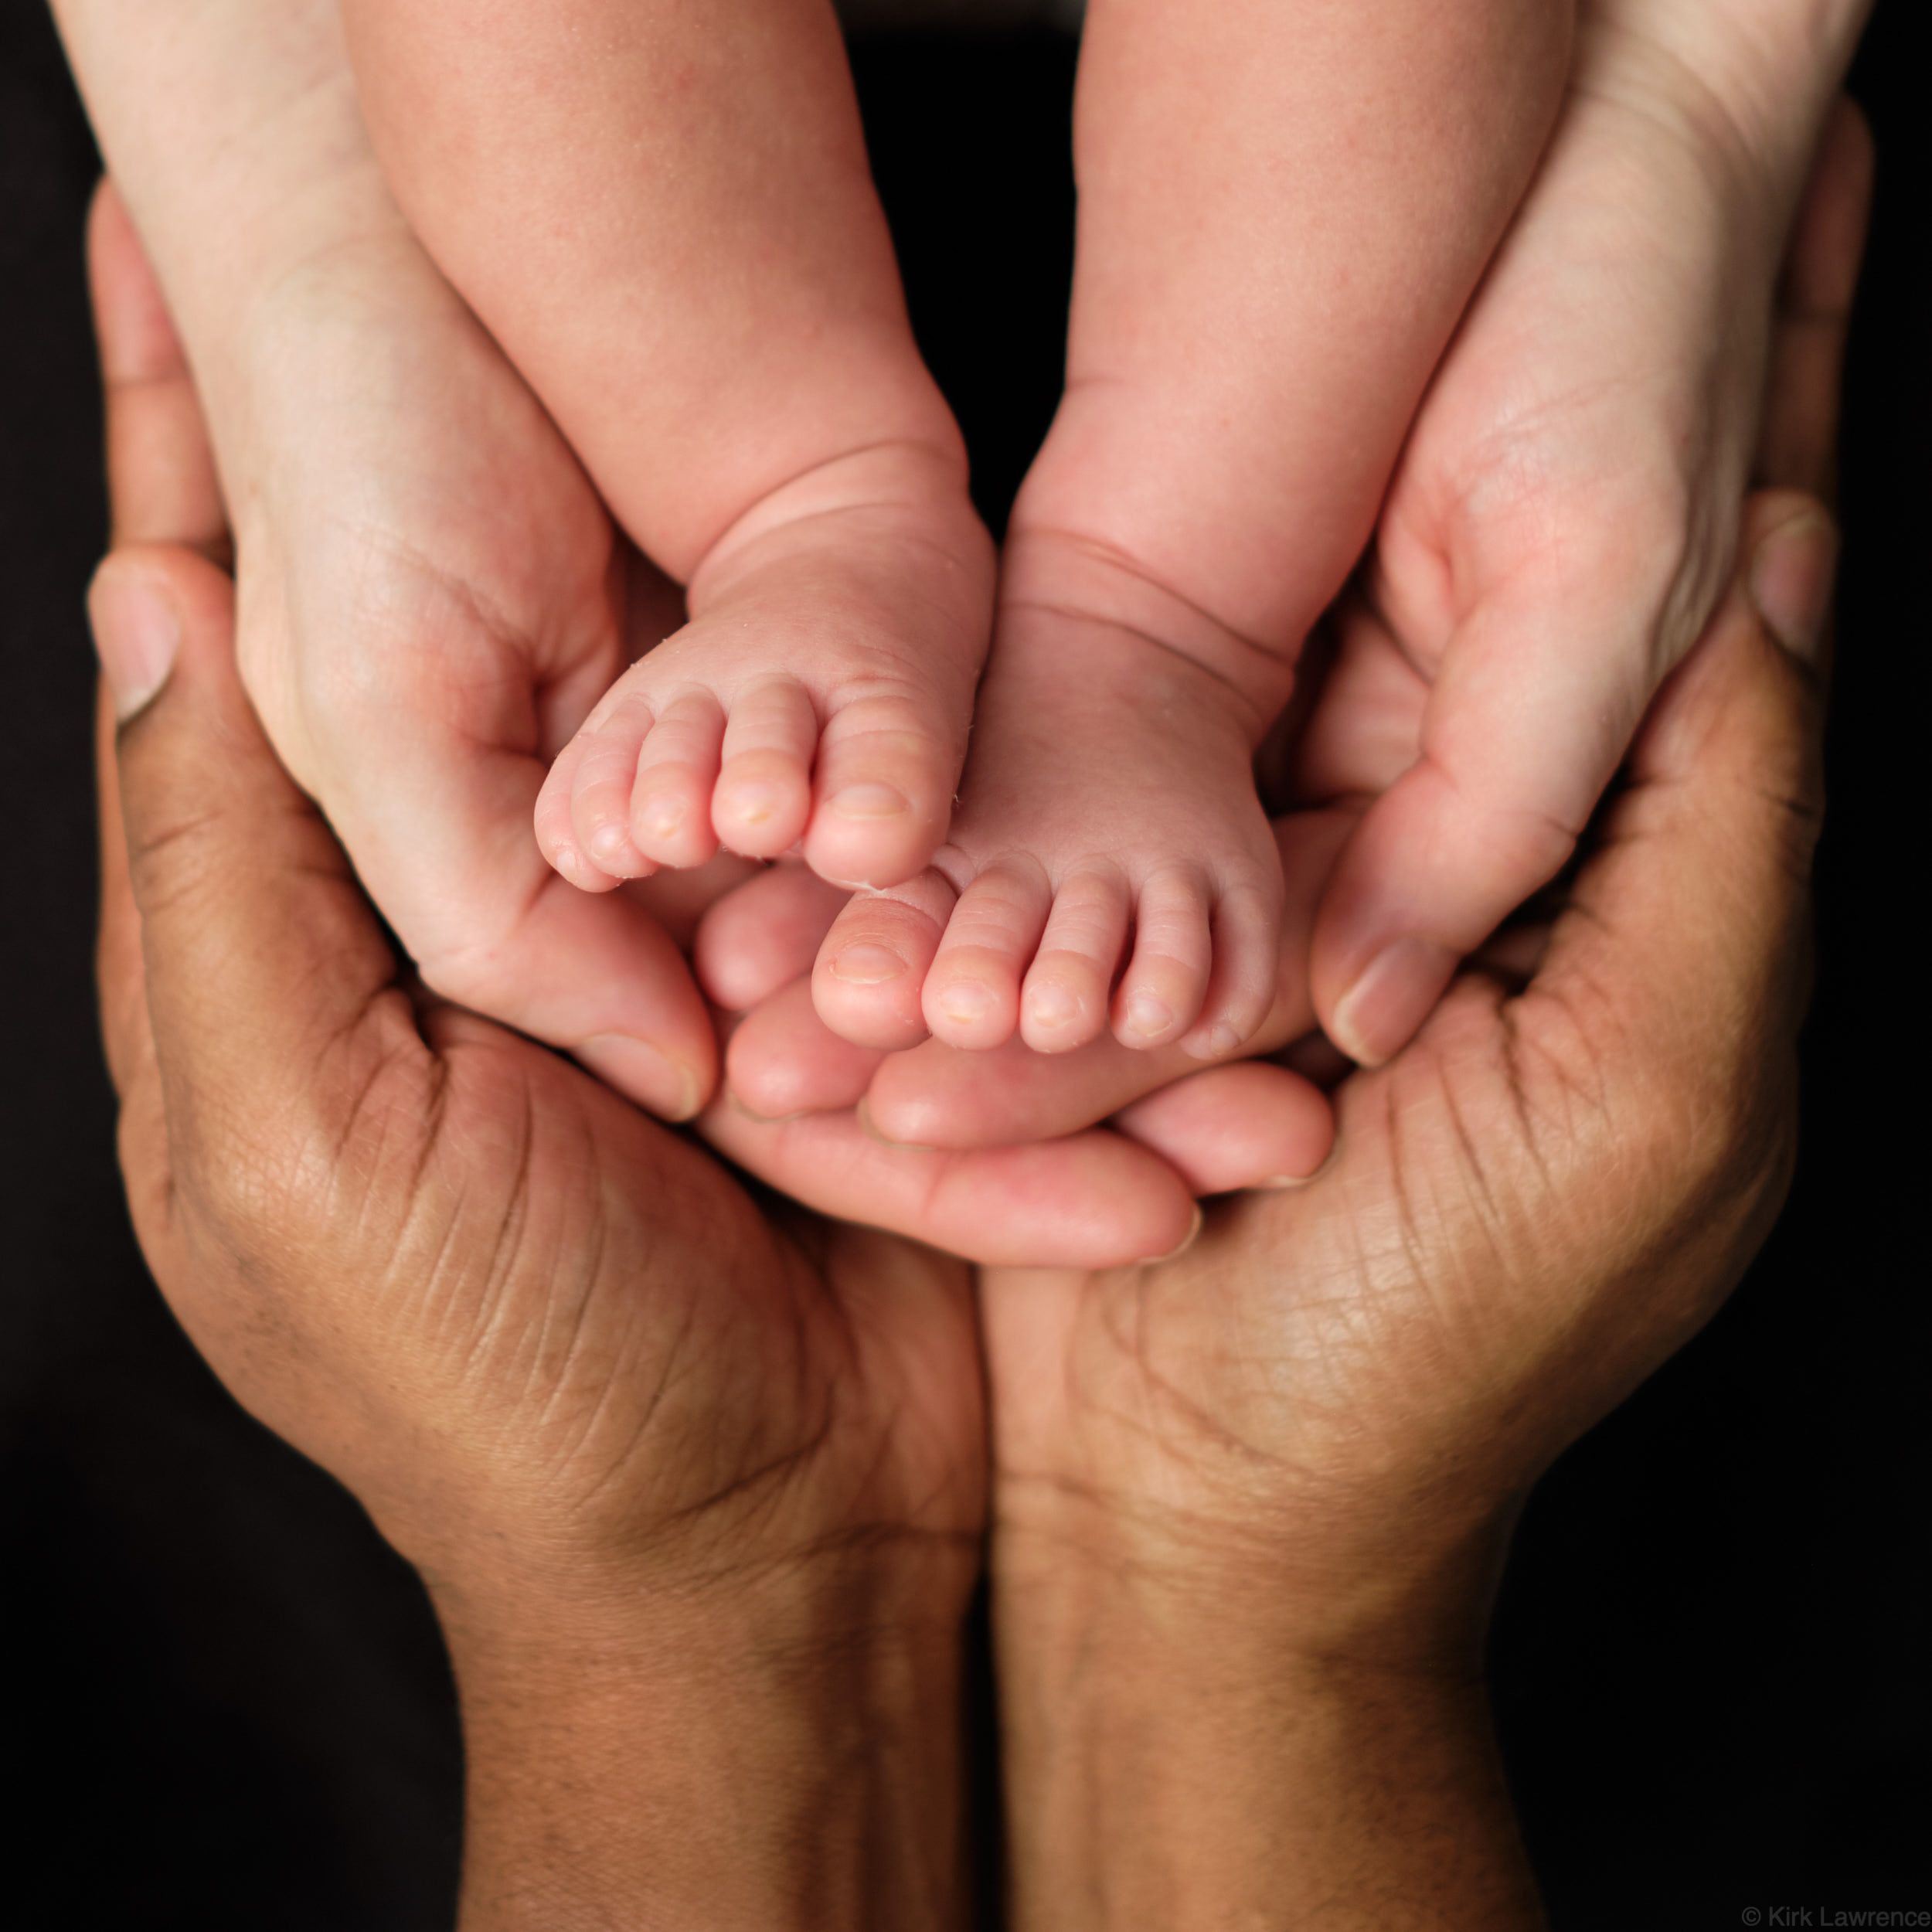 newborn_baby_feet_parents_hands.jpg